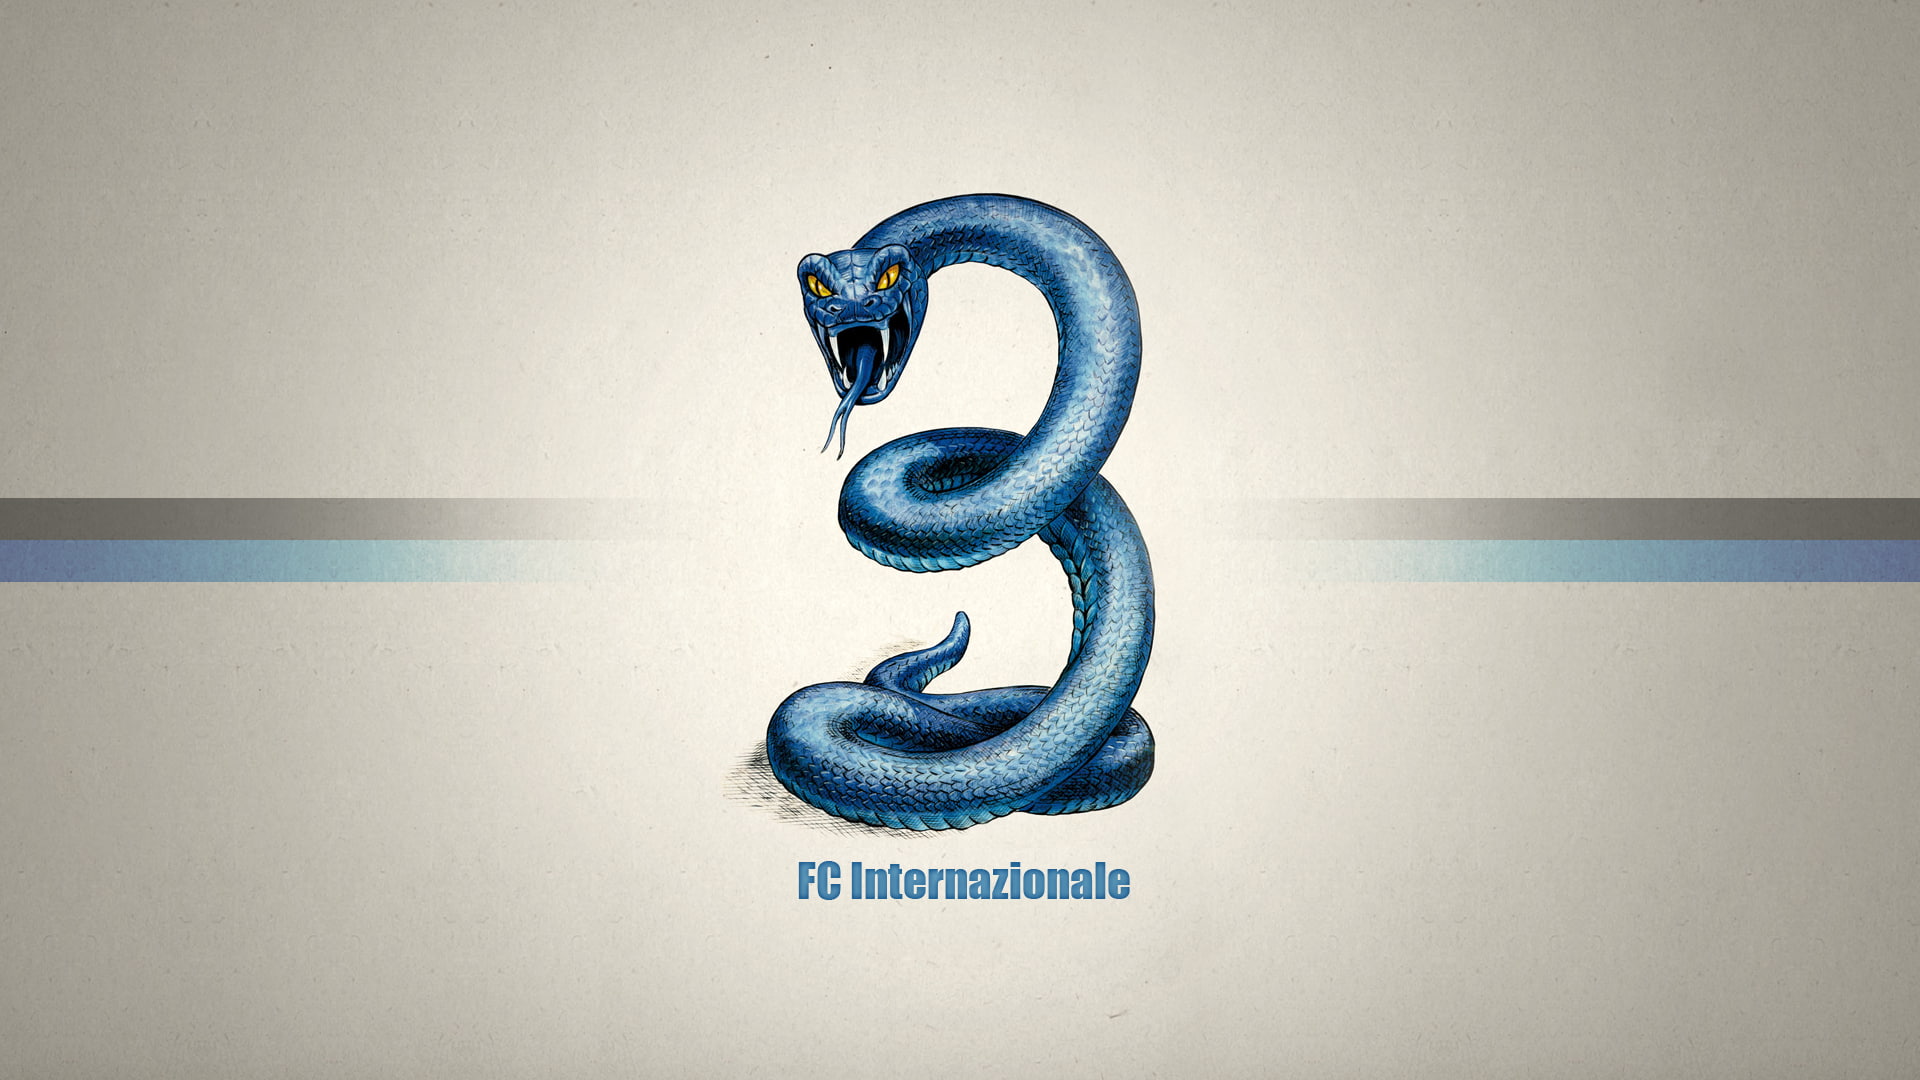 FC Internazionale logo, Snake, Texture, International, no people